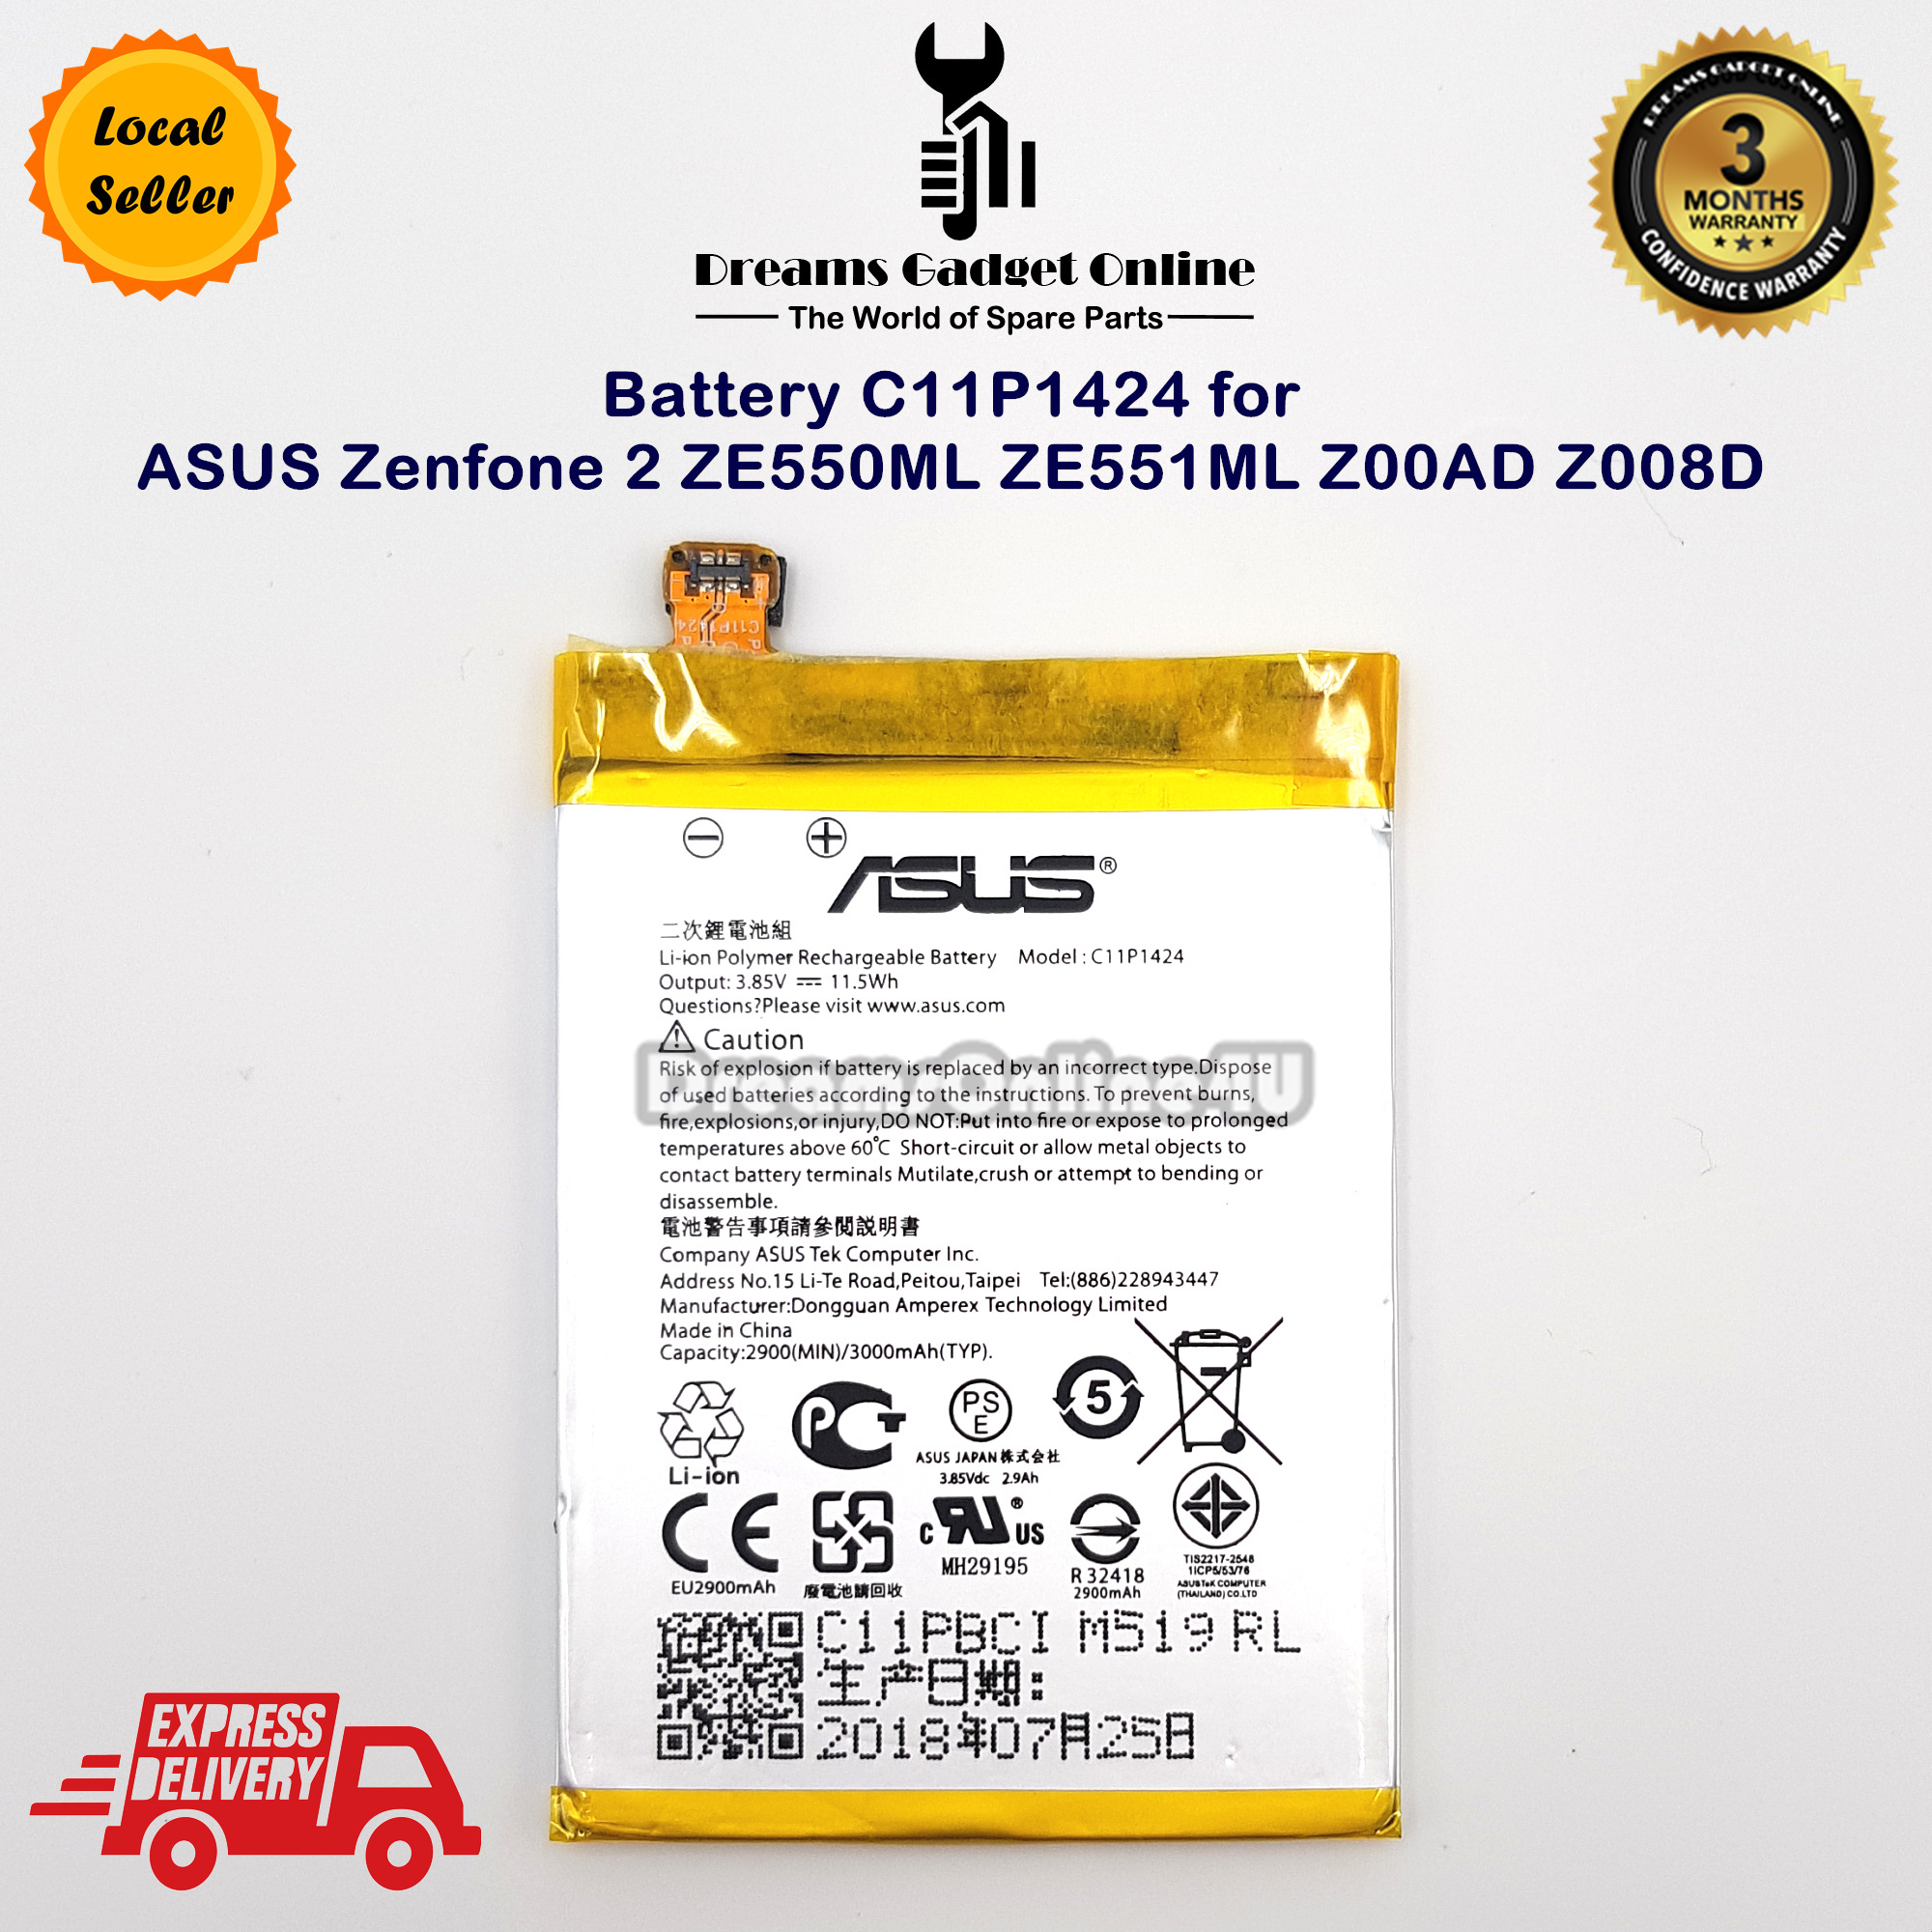 Replacement Battery C11P1424 for ASUS Zenfone 2 ZE550ML ZE551ML Z00AD Z008D  11.5Wh – DreamsOnline4u